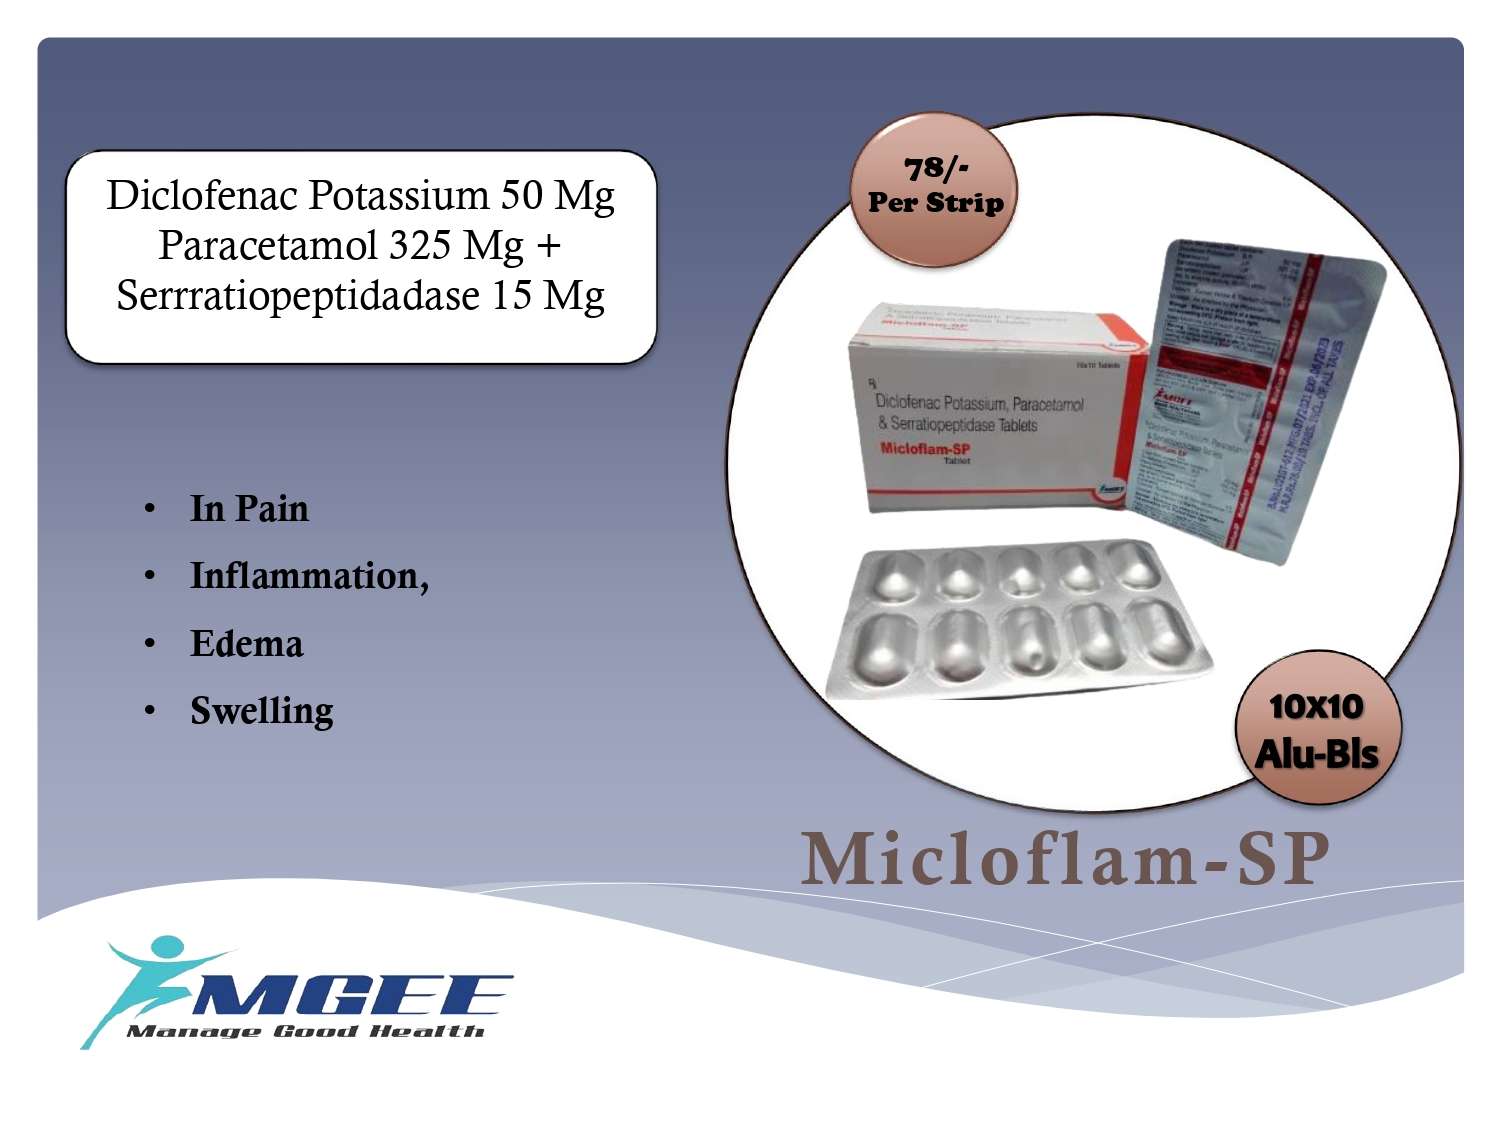 diclofenac potassium 50mg paracetamol 325mg + serratiopeptidase
15mg